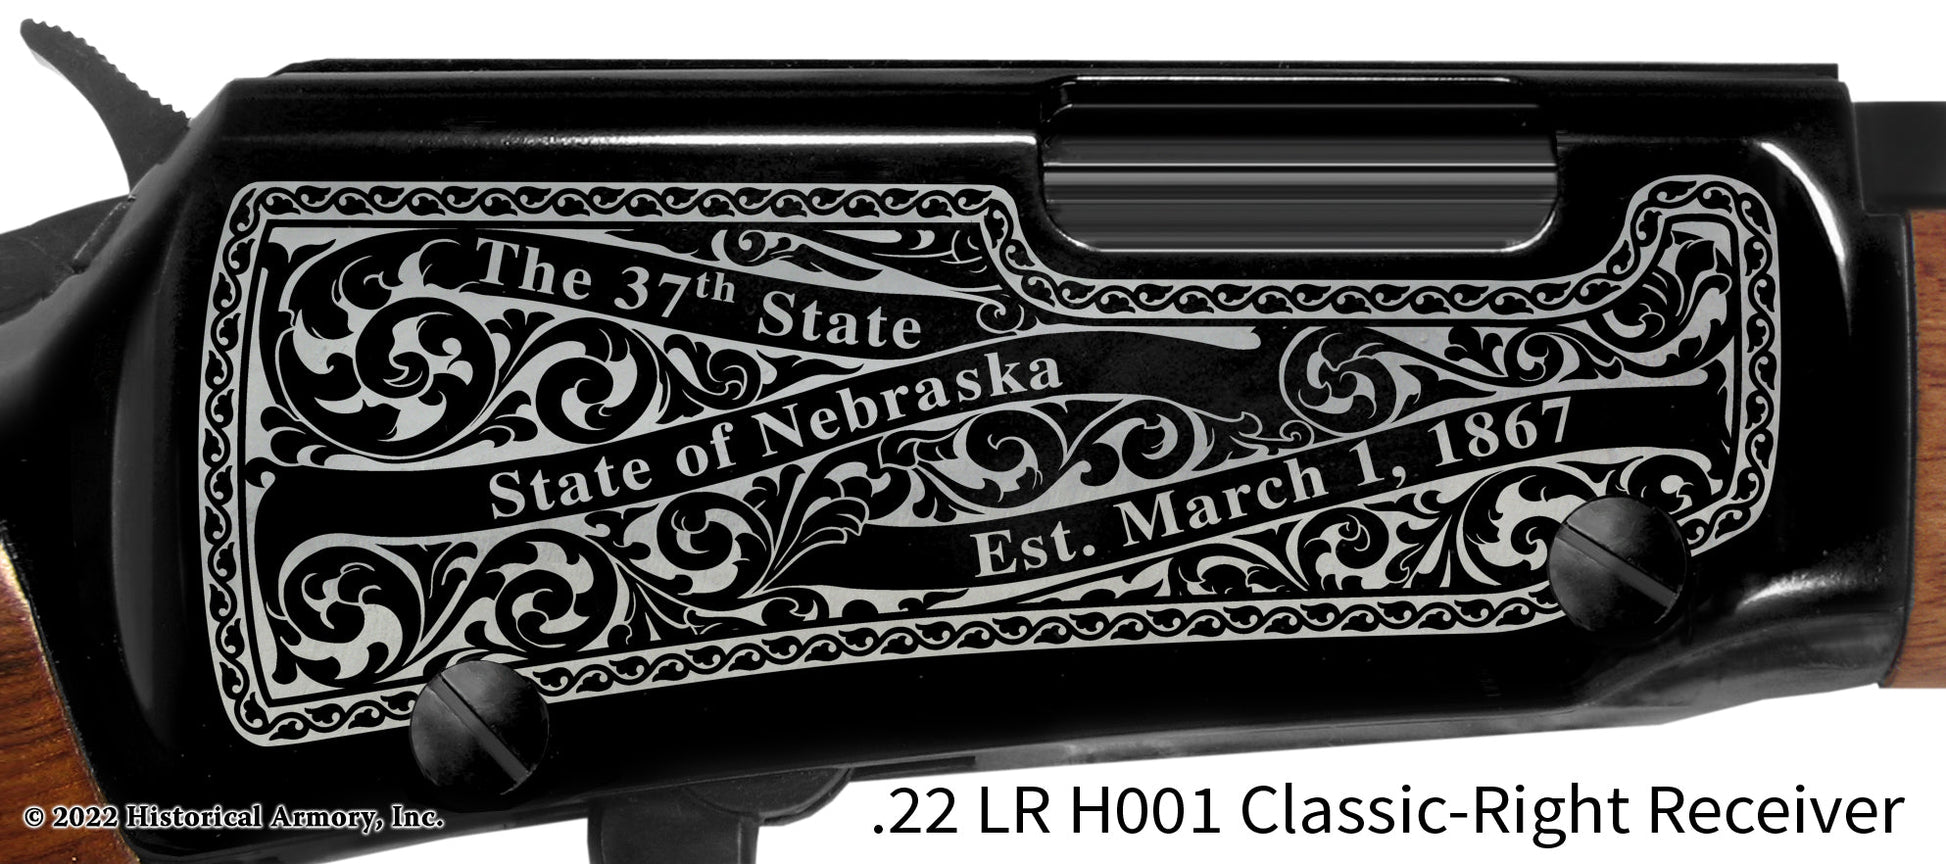 Seward County Nebraska Engraved Henry H001 Rifle